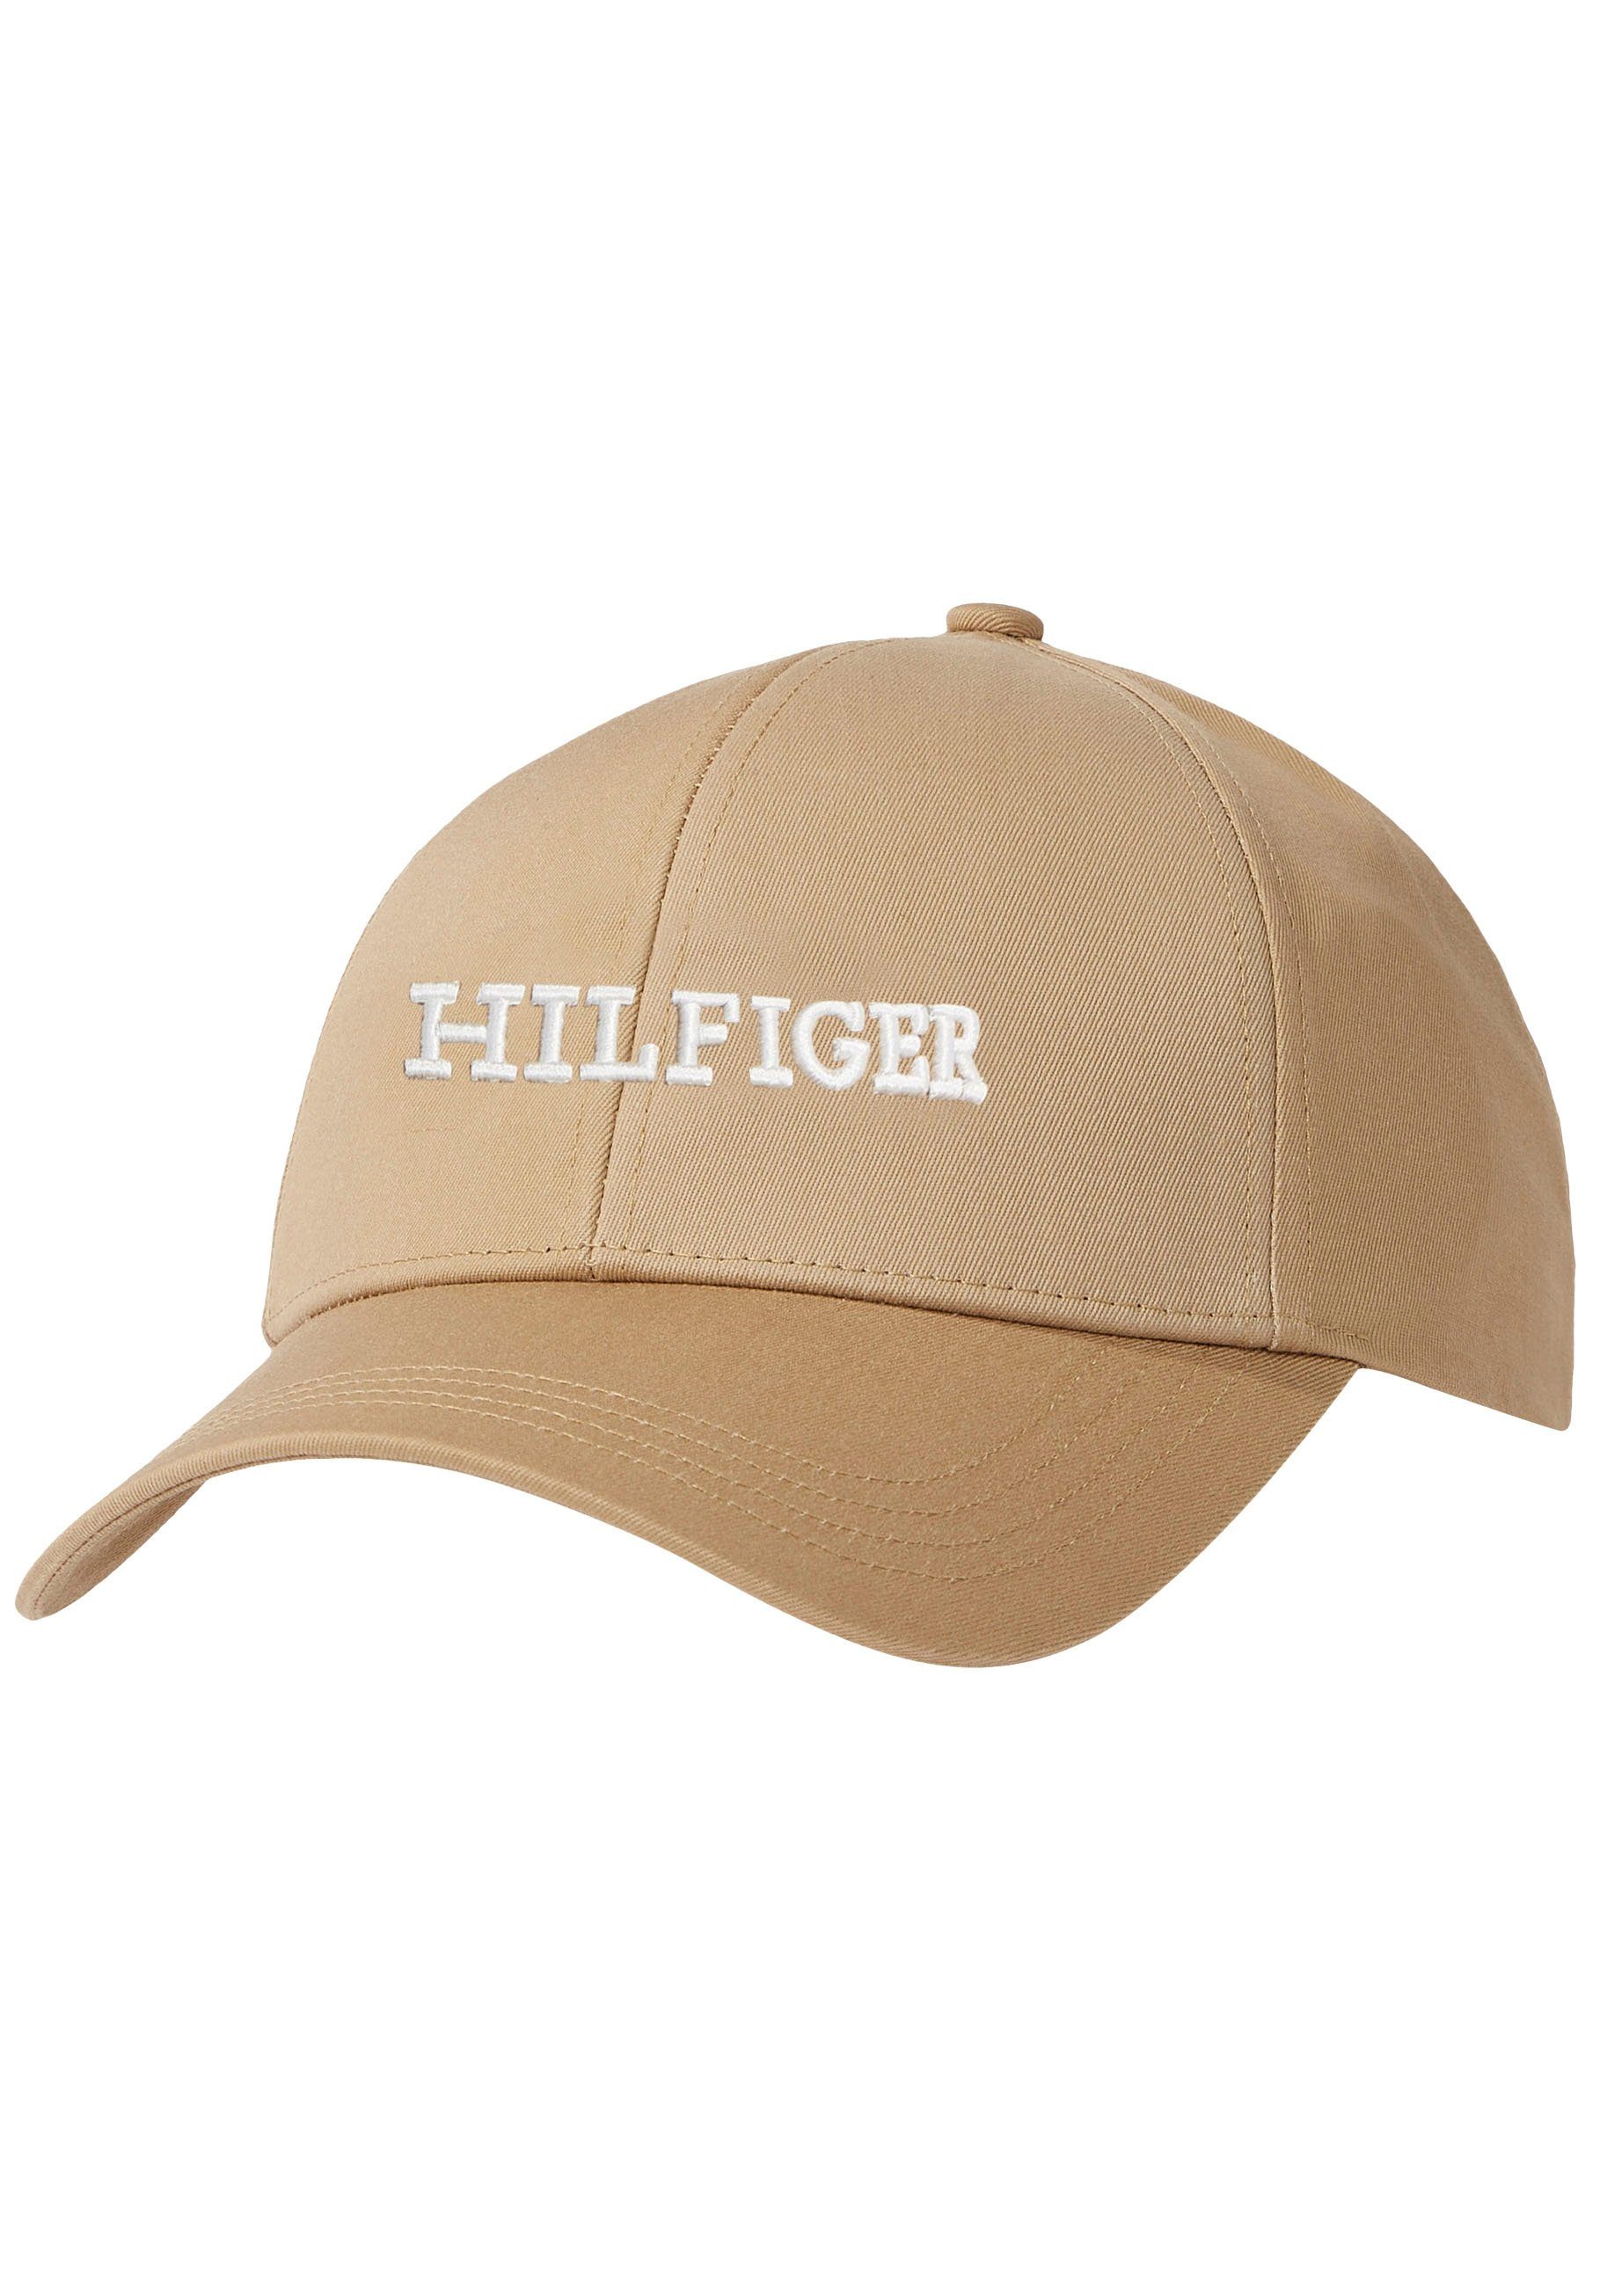 Tommy Hilfiger Hilfiger Cap CAP HILFIGER Classic Monogramm vorn Khaki gesticktem mit Baseball